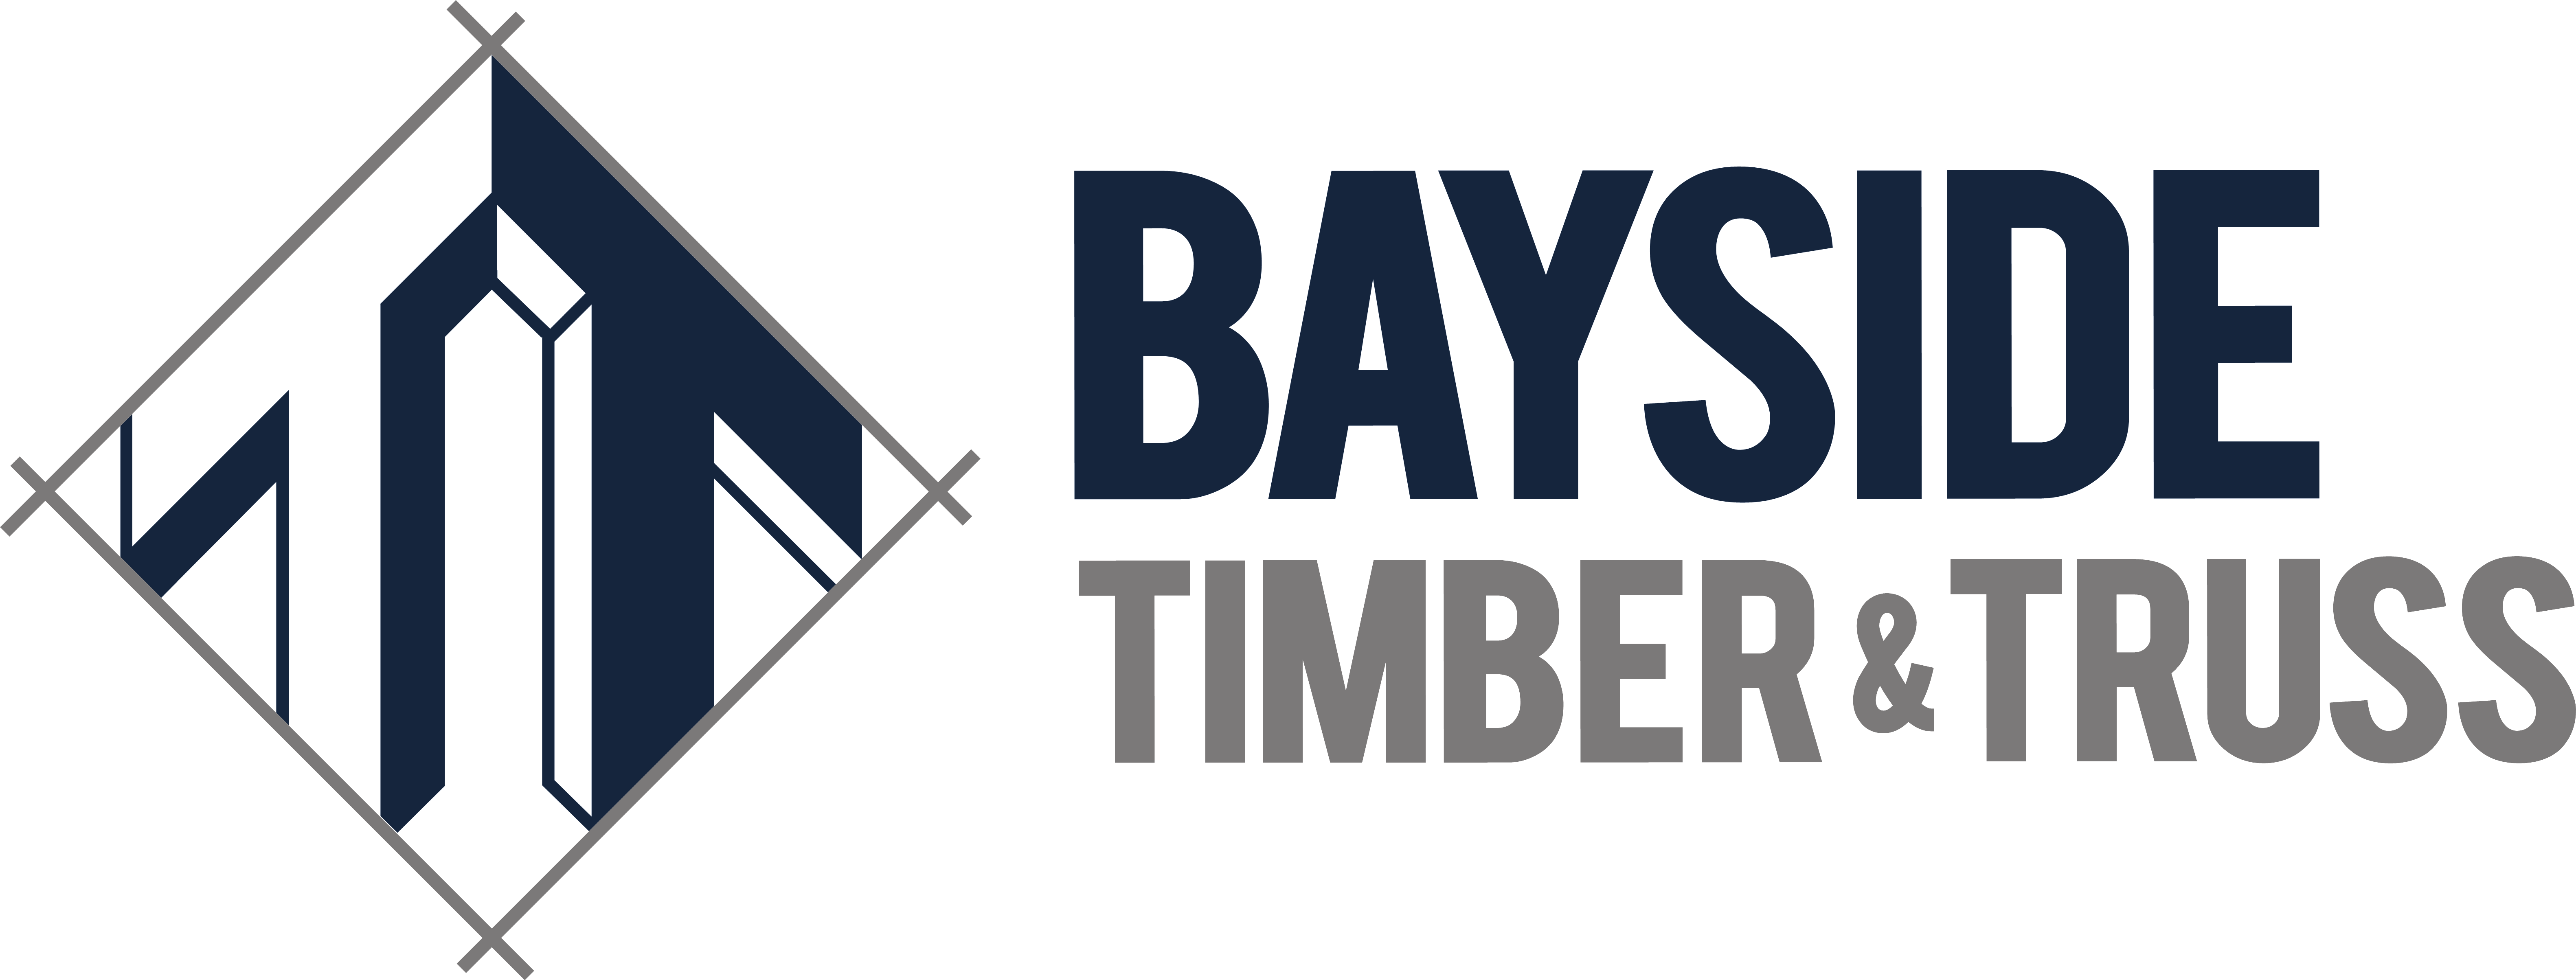 Bayside Timber & Truss